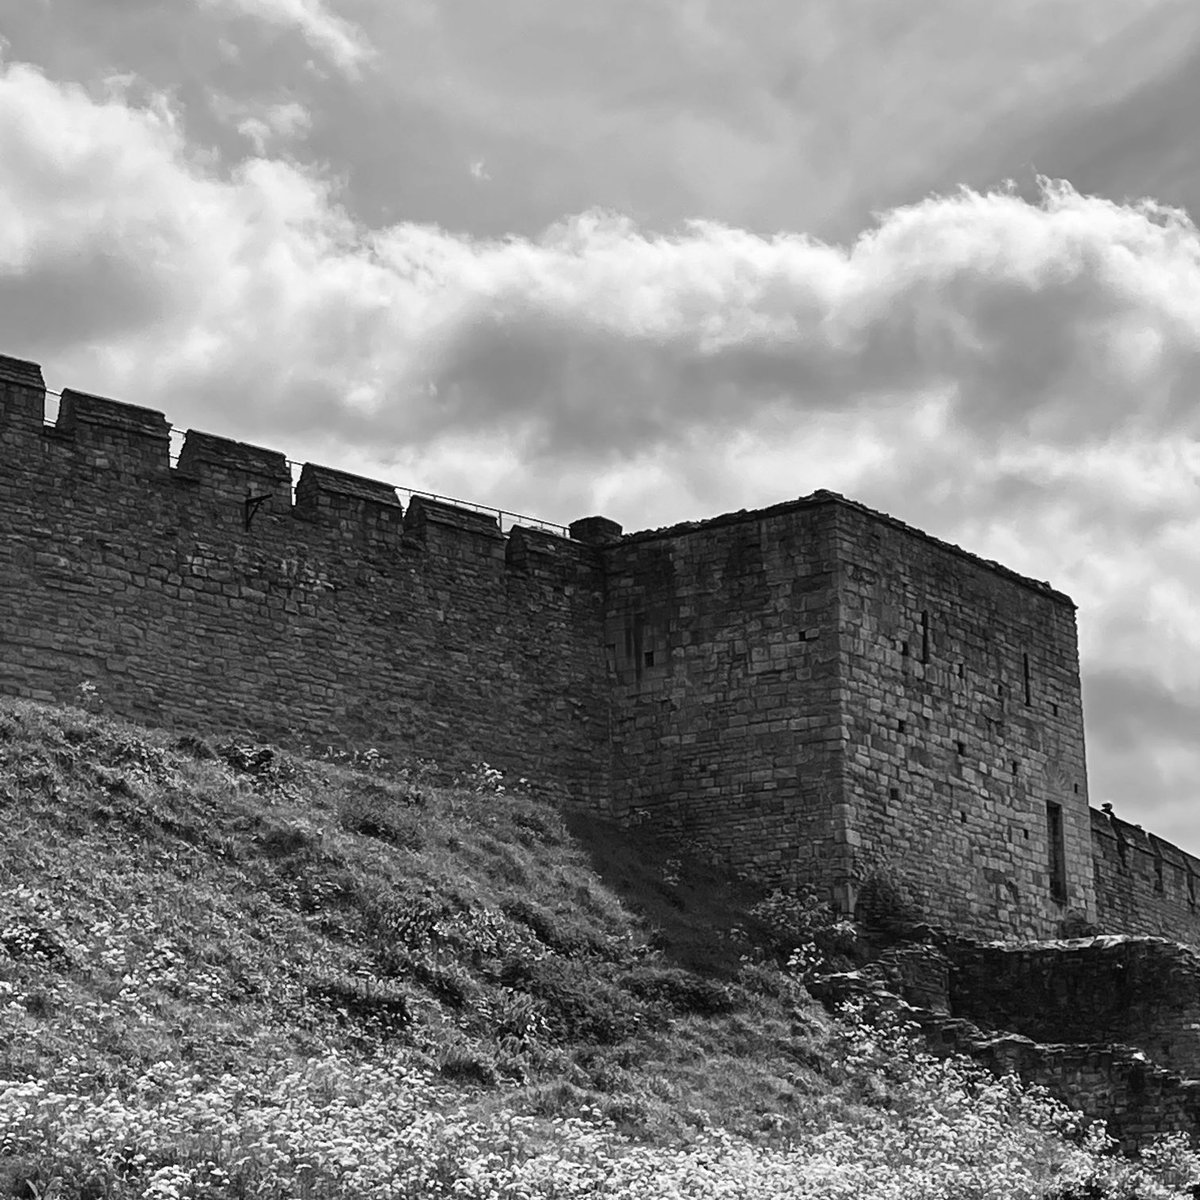 ‘The whole castle might well be haunted’ #BernardSamuelGilbert 1914, site 4 on the livinglincoln.co.uk/# trail #LivingLincoln #GilbertCountry @visitlincoln #FestivalofHistory @BGUHistory @BGUEnglish @bgu_archaeology @BGULincoln ⁦⁦@LincolnCastle⁩